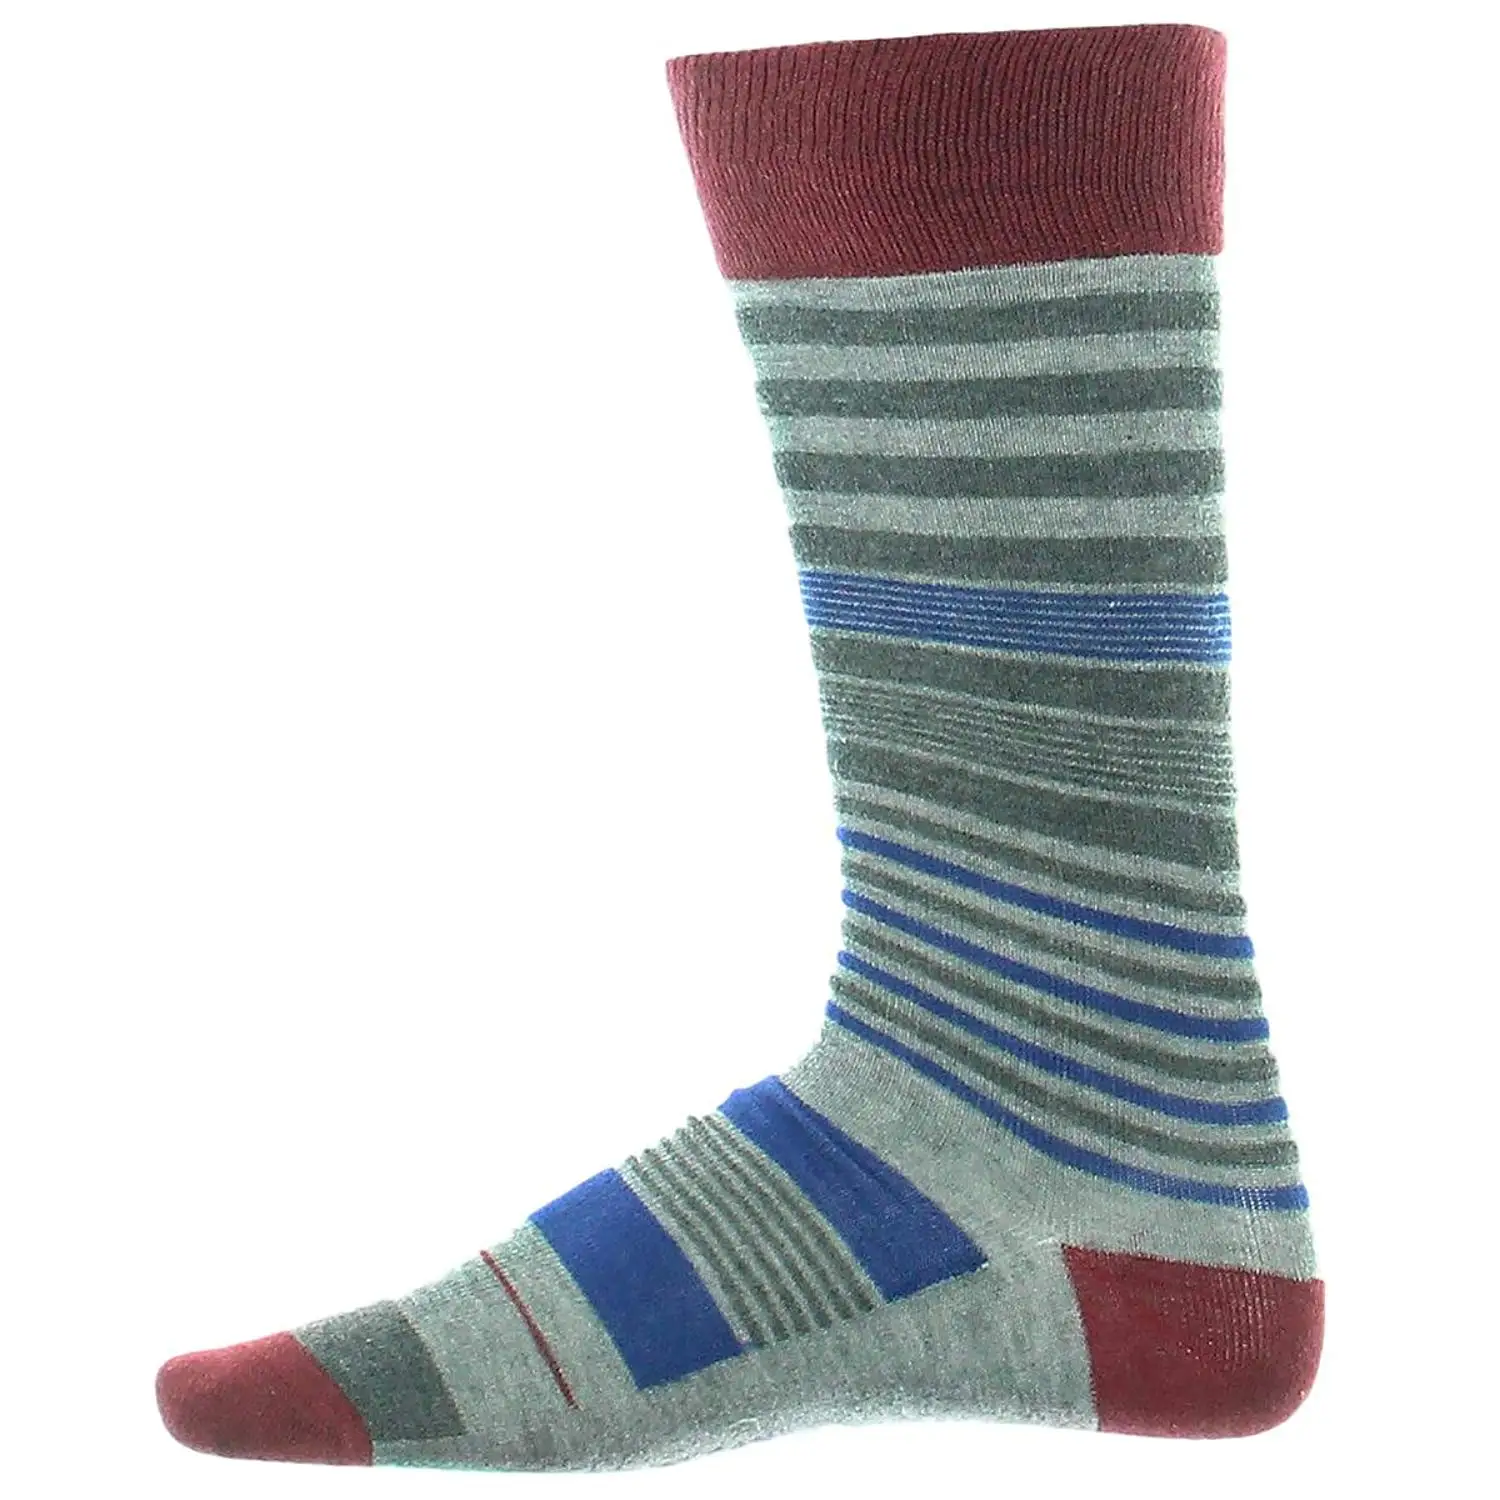 absolutely seamless socks